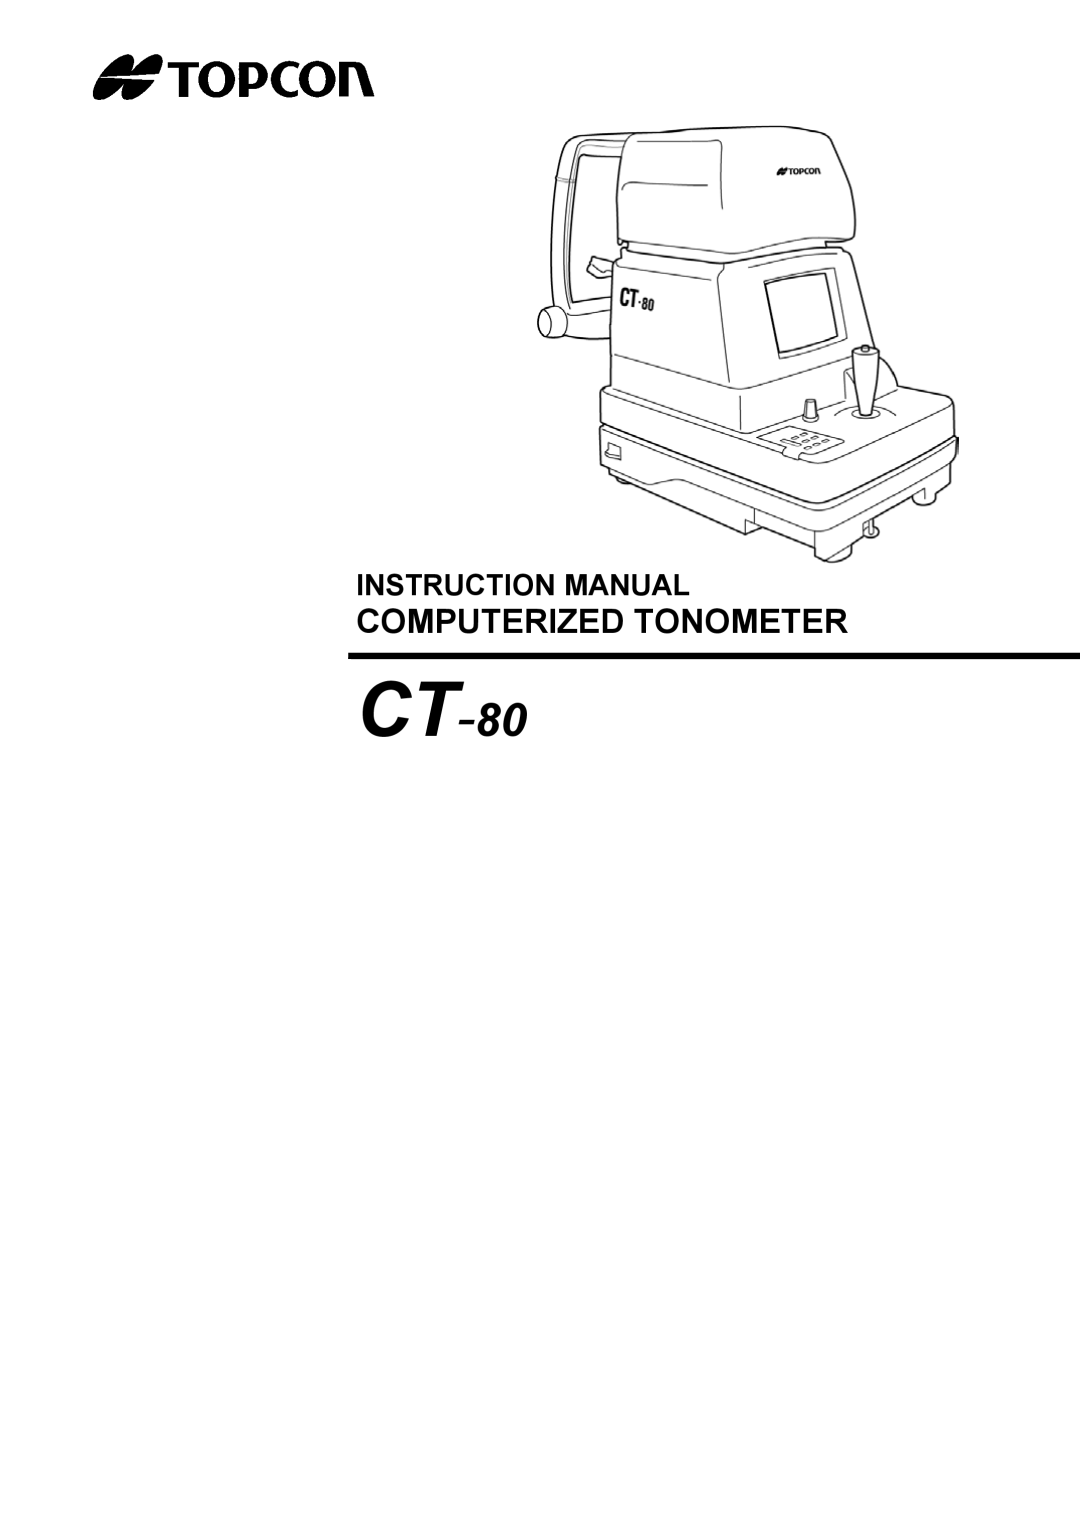 Topcon COMPUTERIZED TONOMETER instruction manual CT-80 